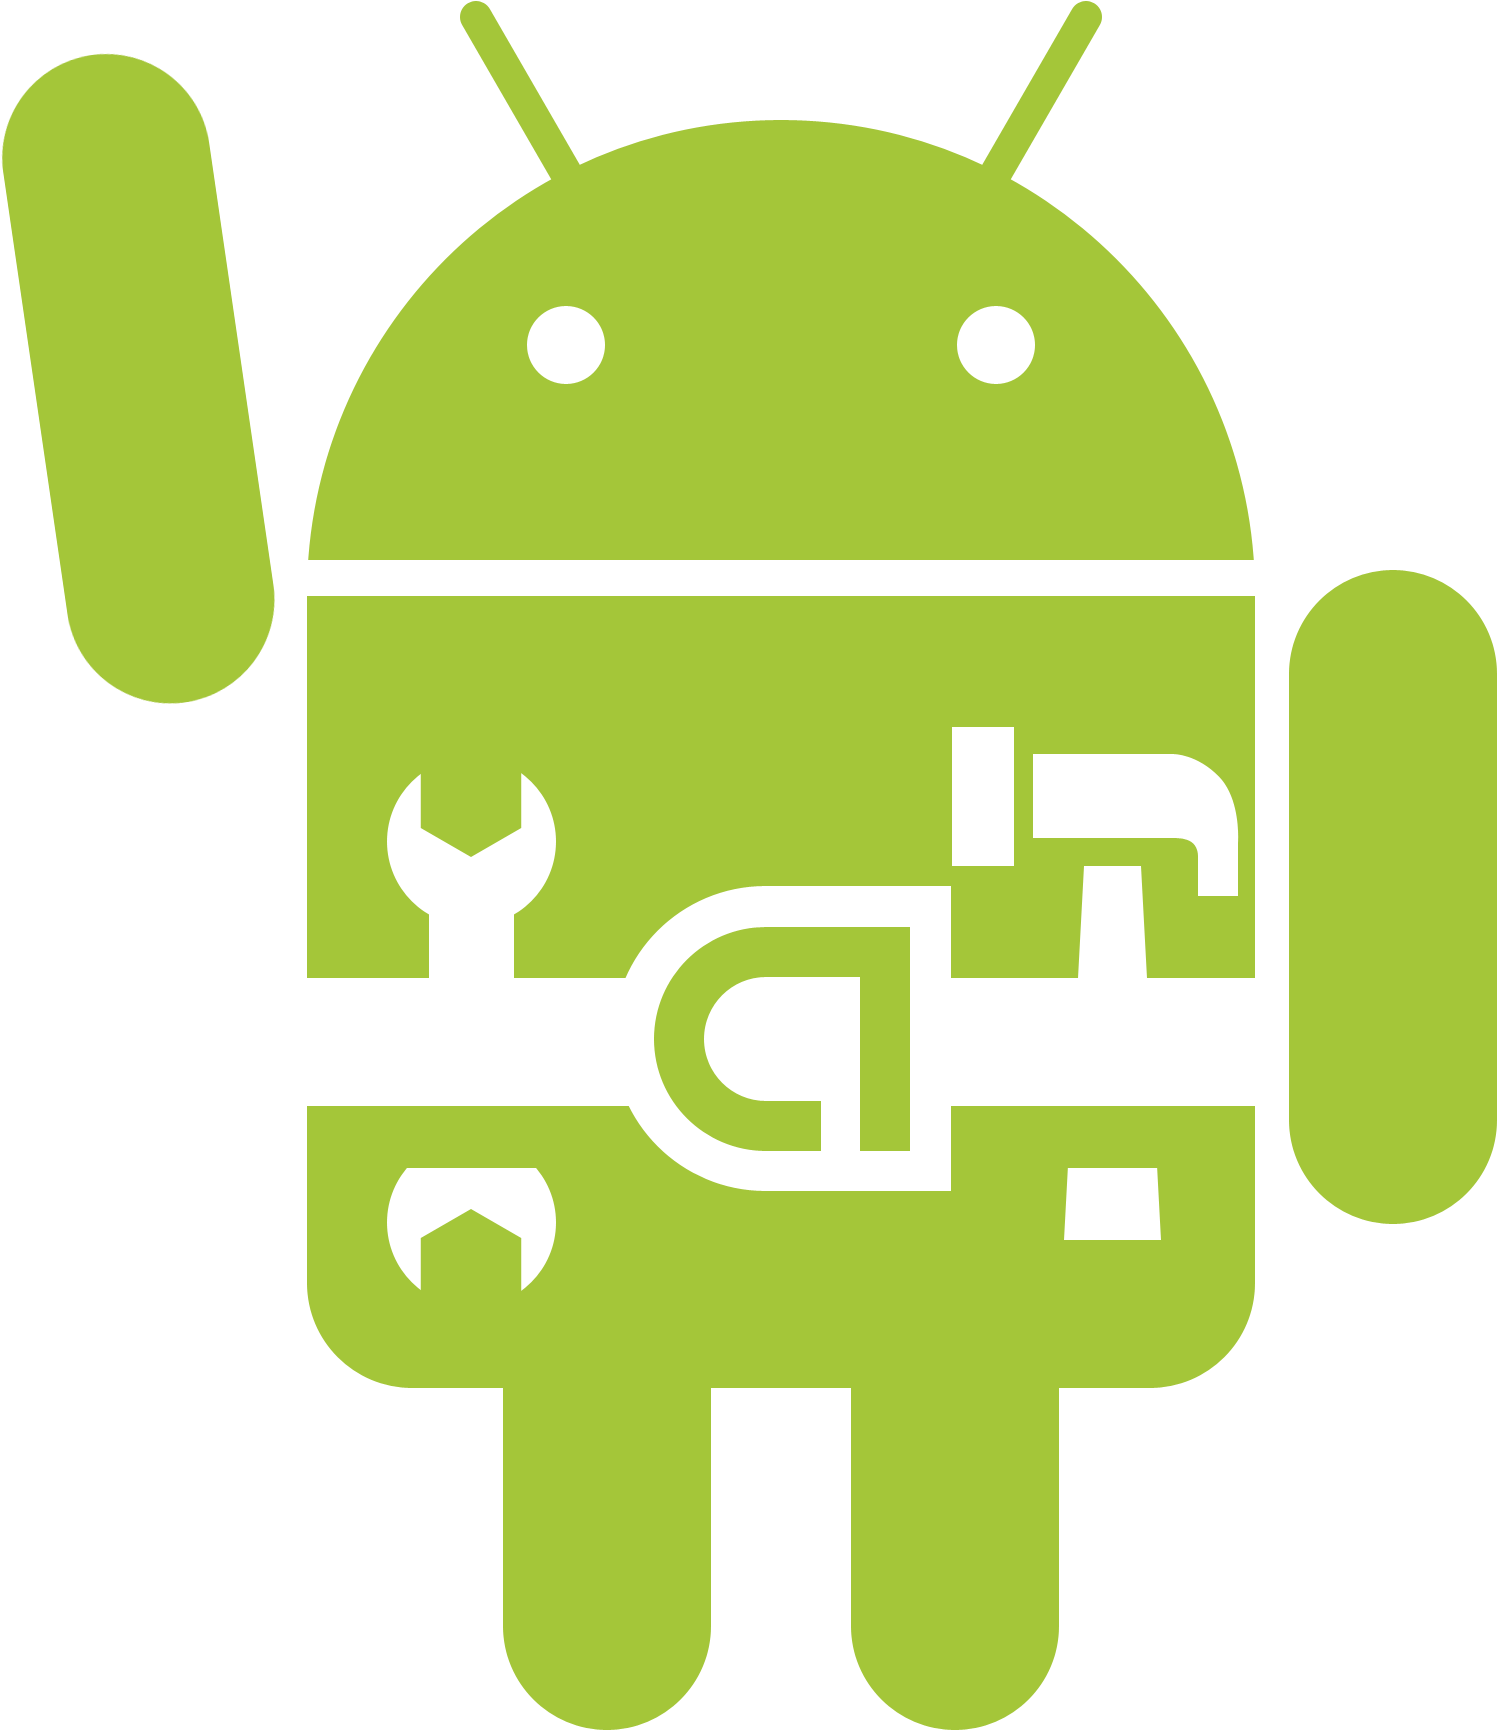 Логотип андроид. Иконка Android. Иконки для приложений Android. Android картинки.